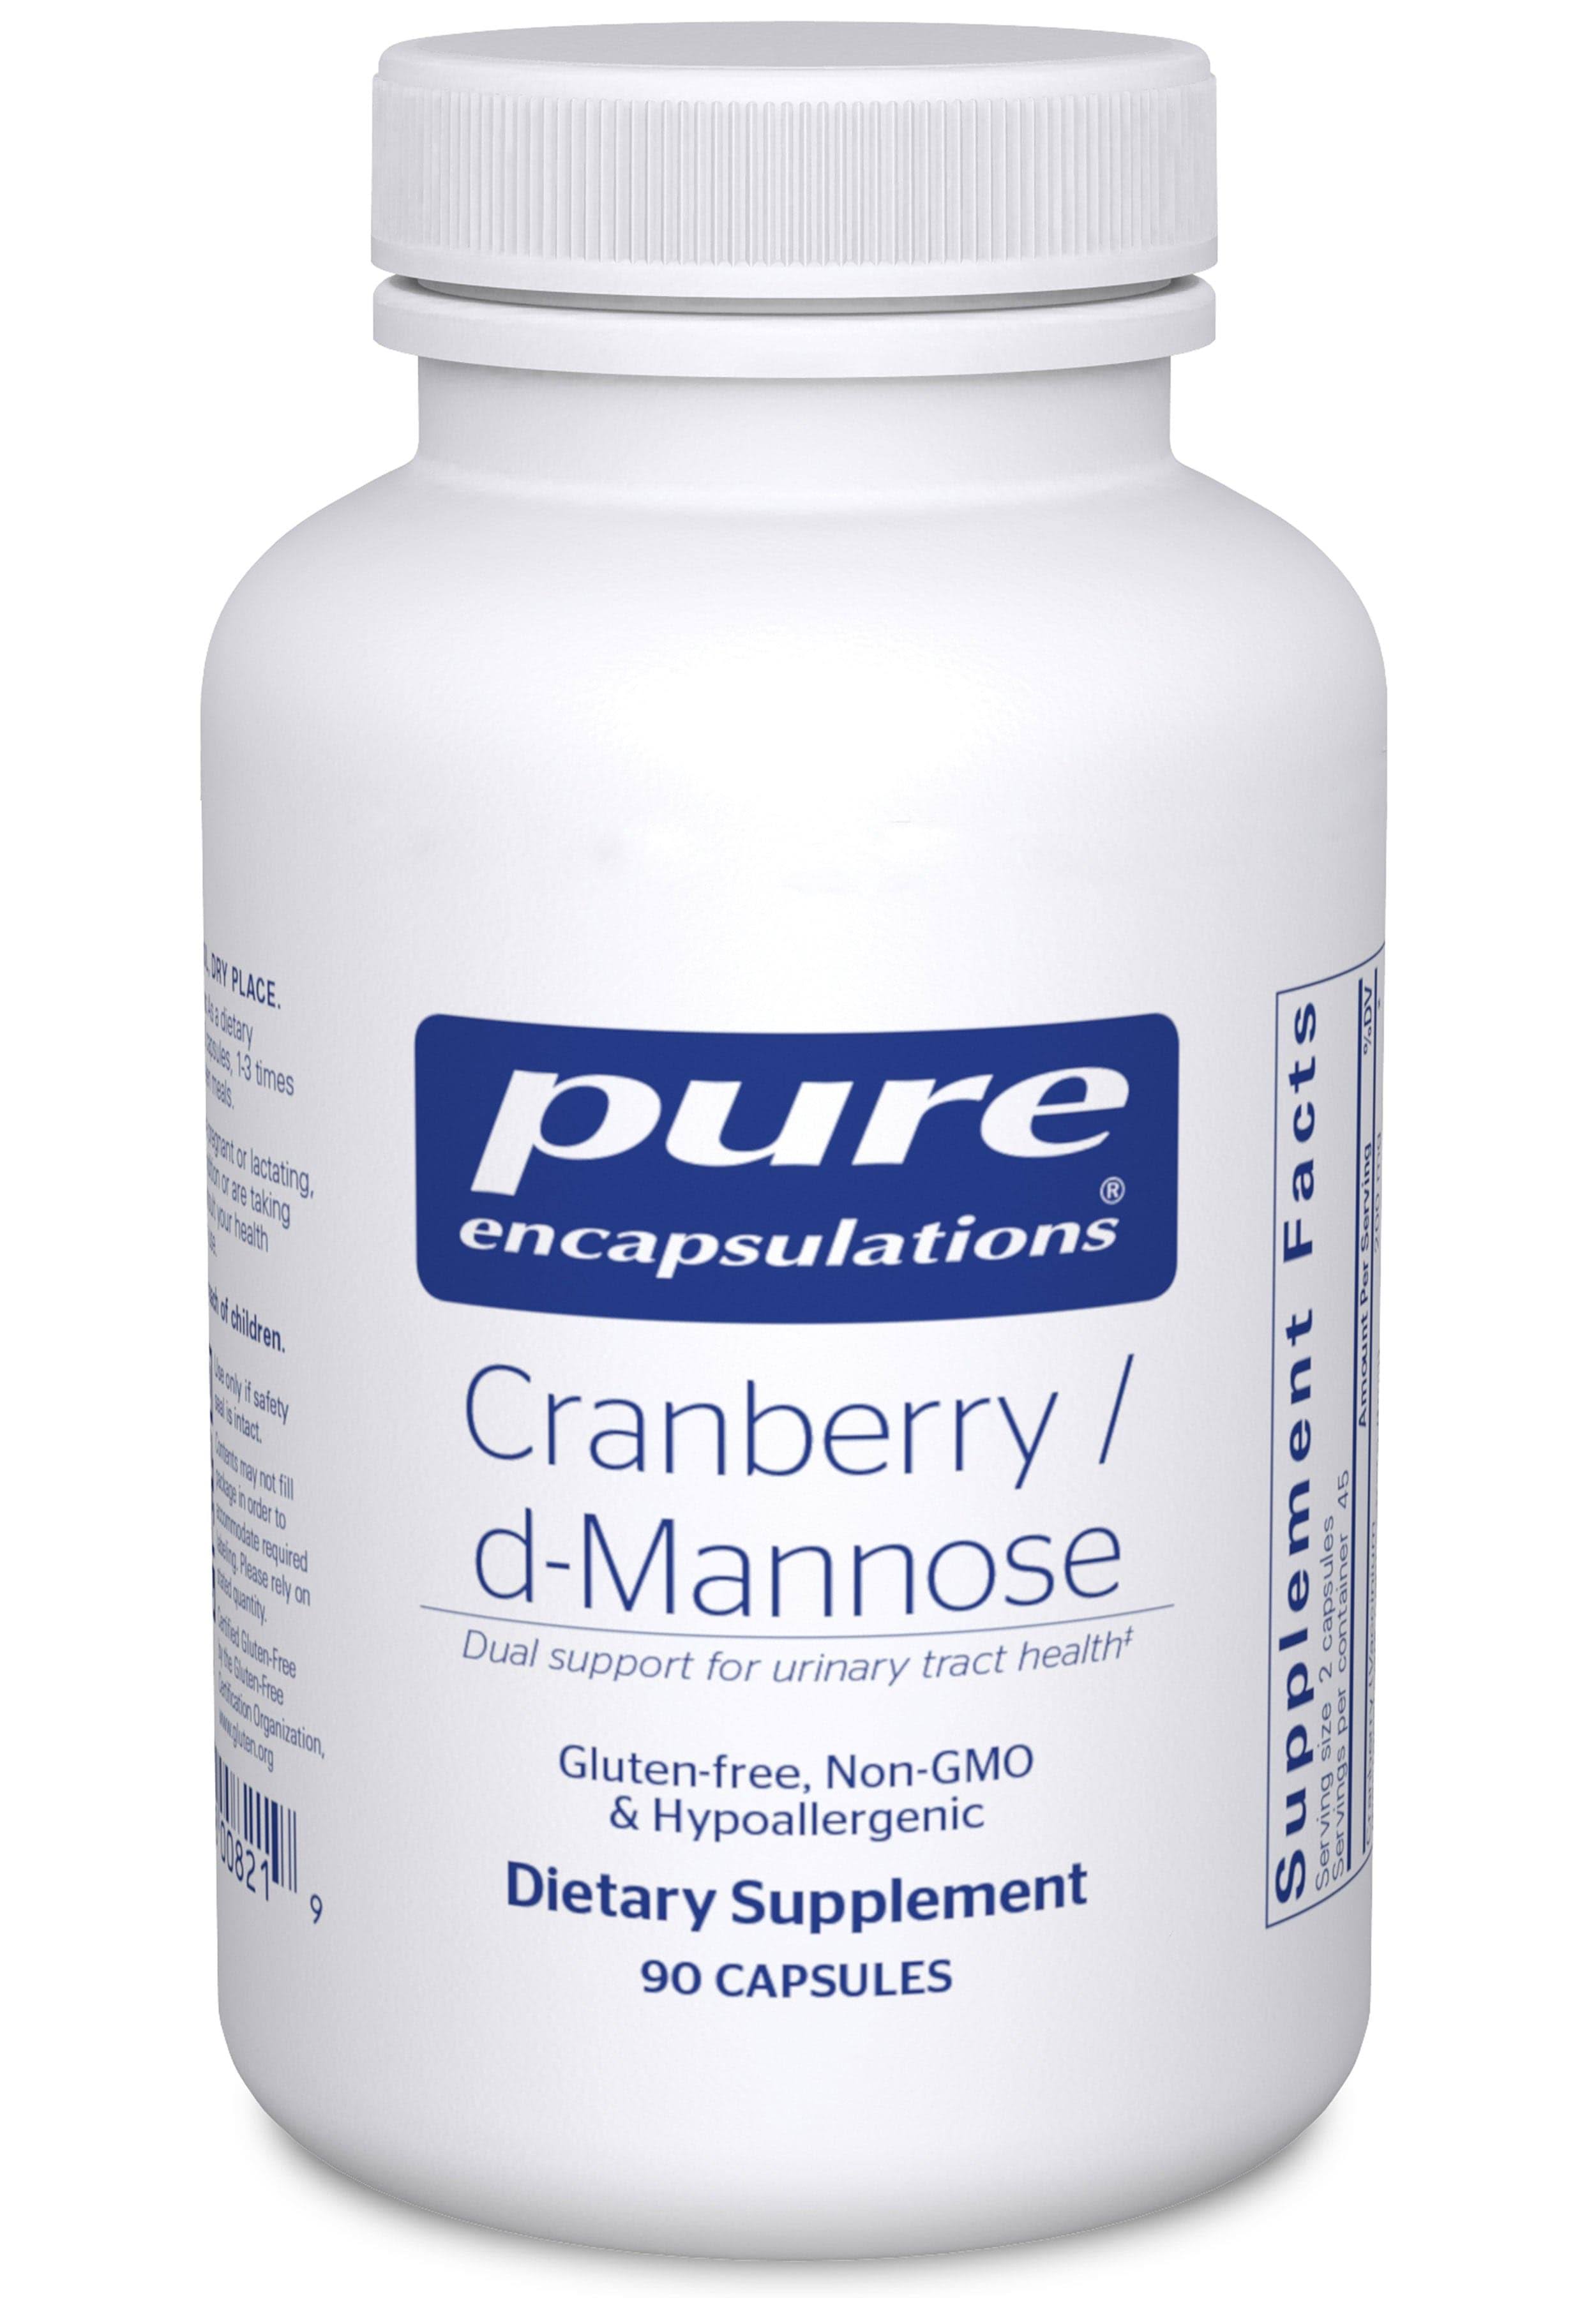 Pure Encapsulations Cranberry/D-Mannose Supplement - 90 Capsules